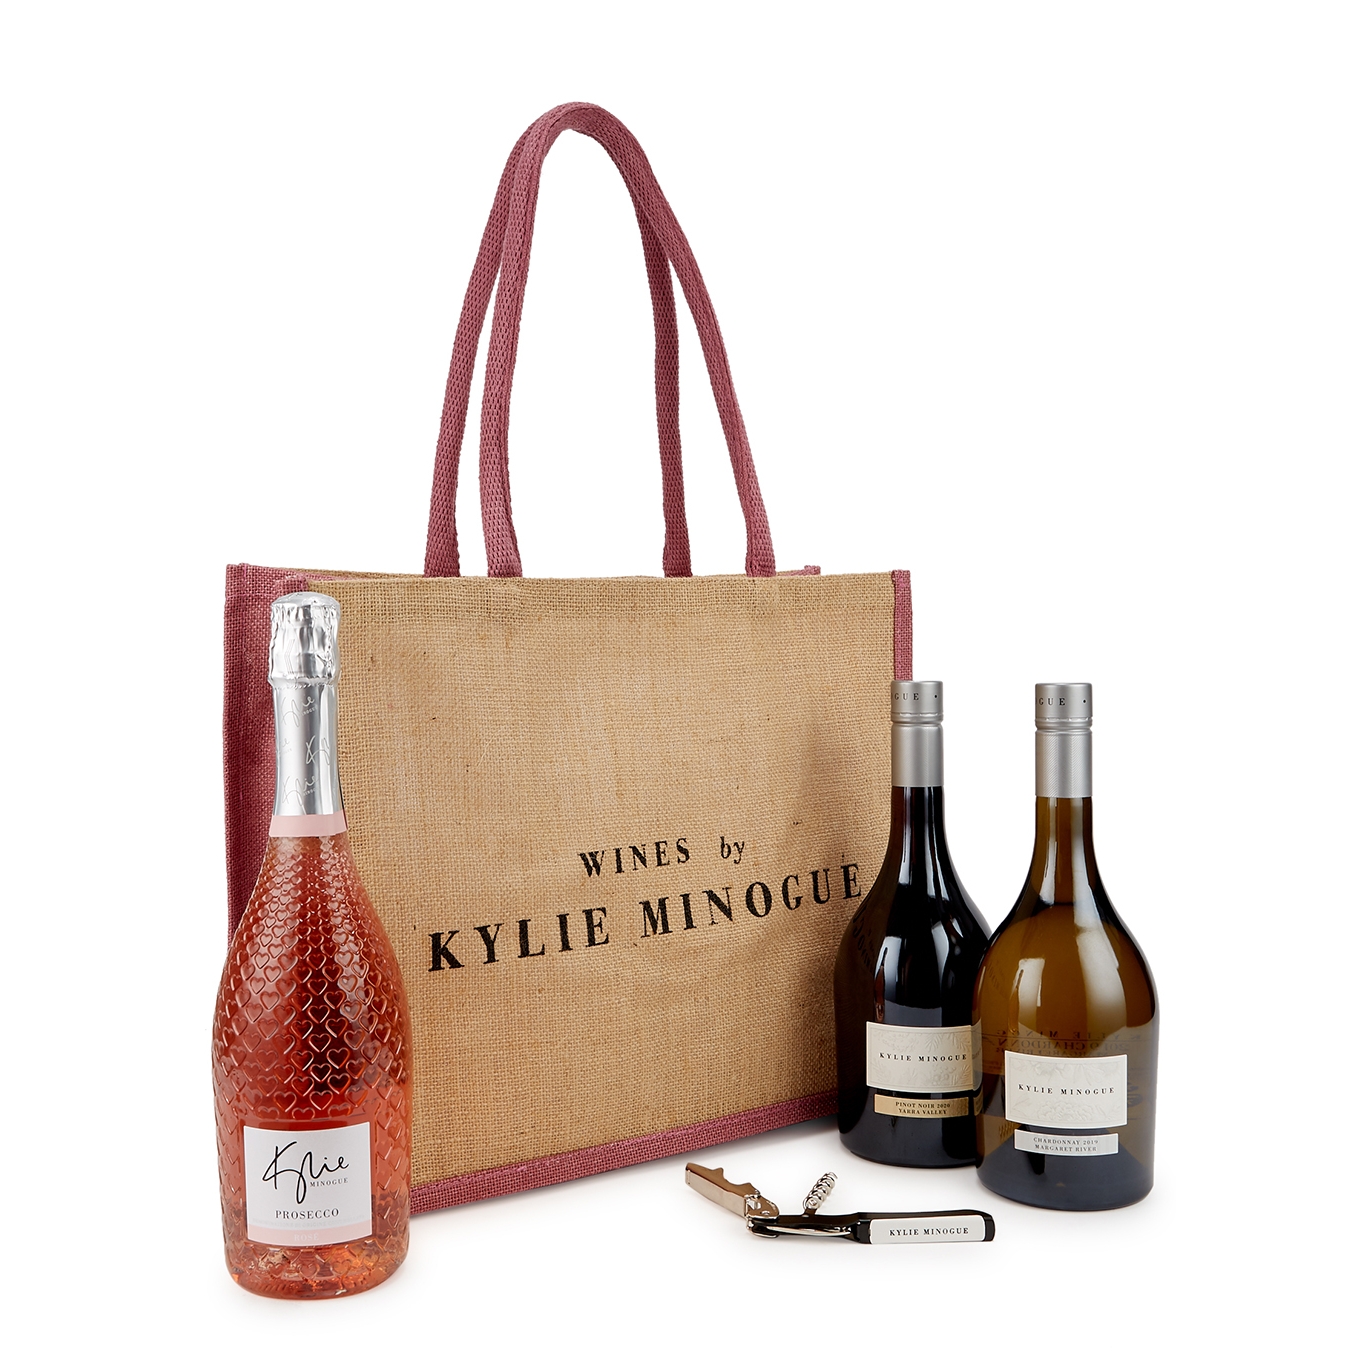 Kylie Minogue Wines Wines by Kylie Minogue Jute Bag Gift Set, 2250ml